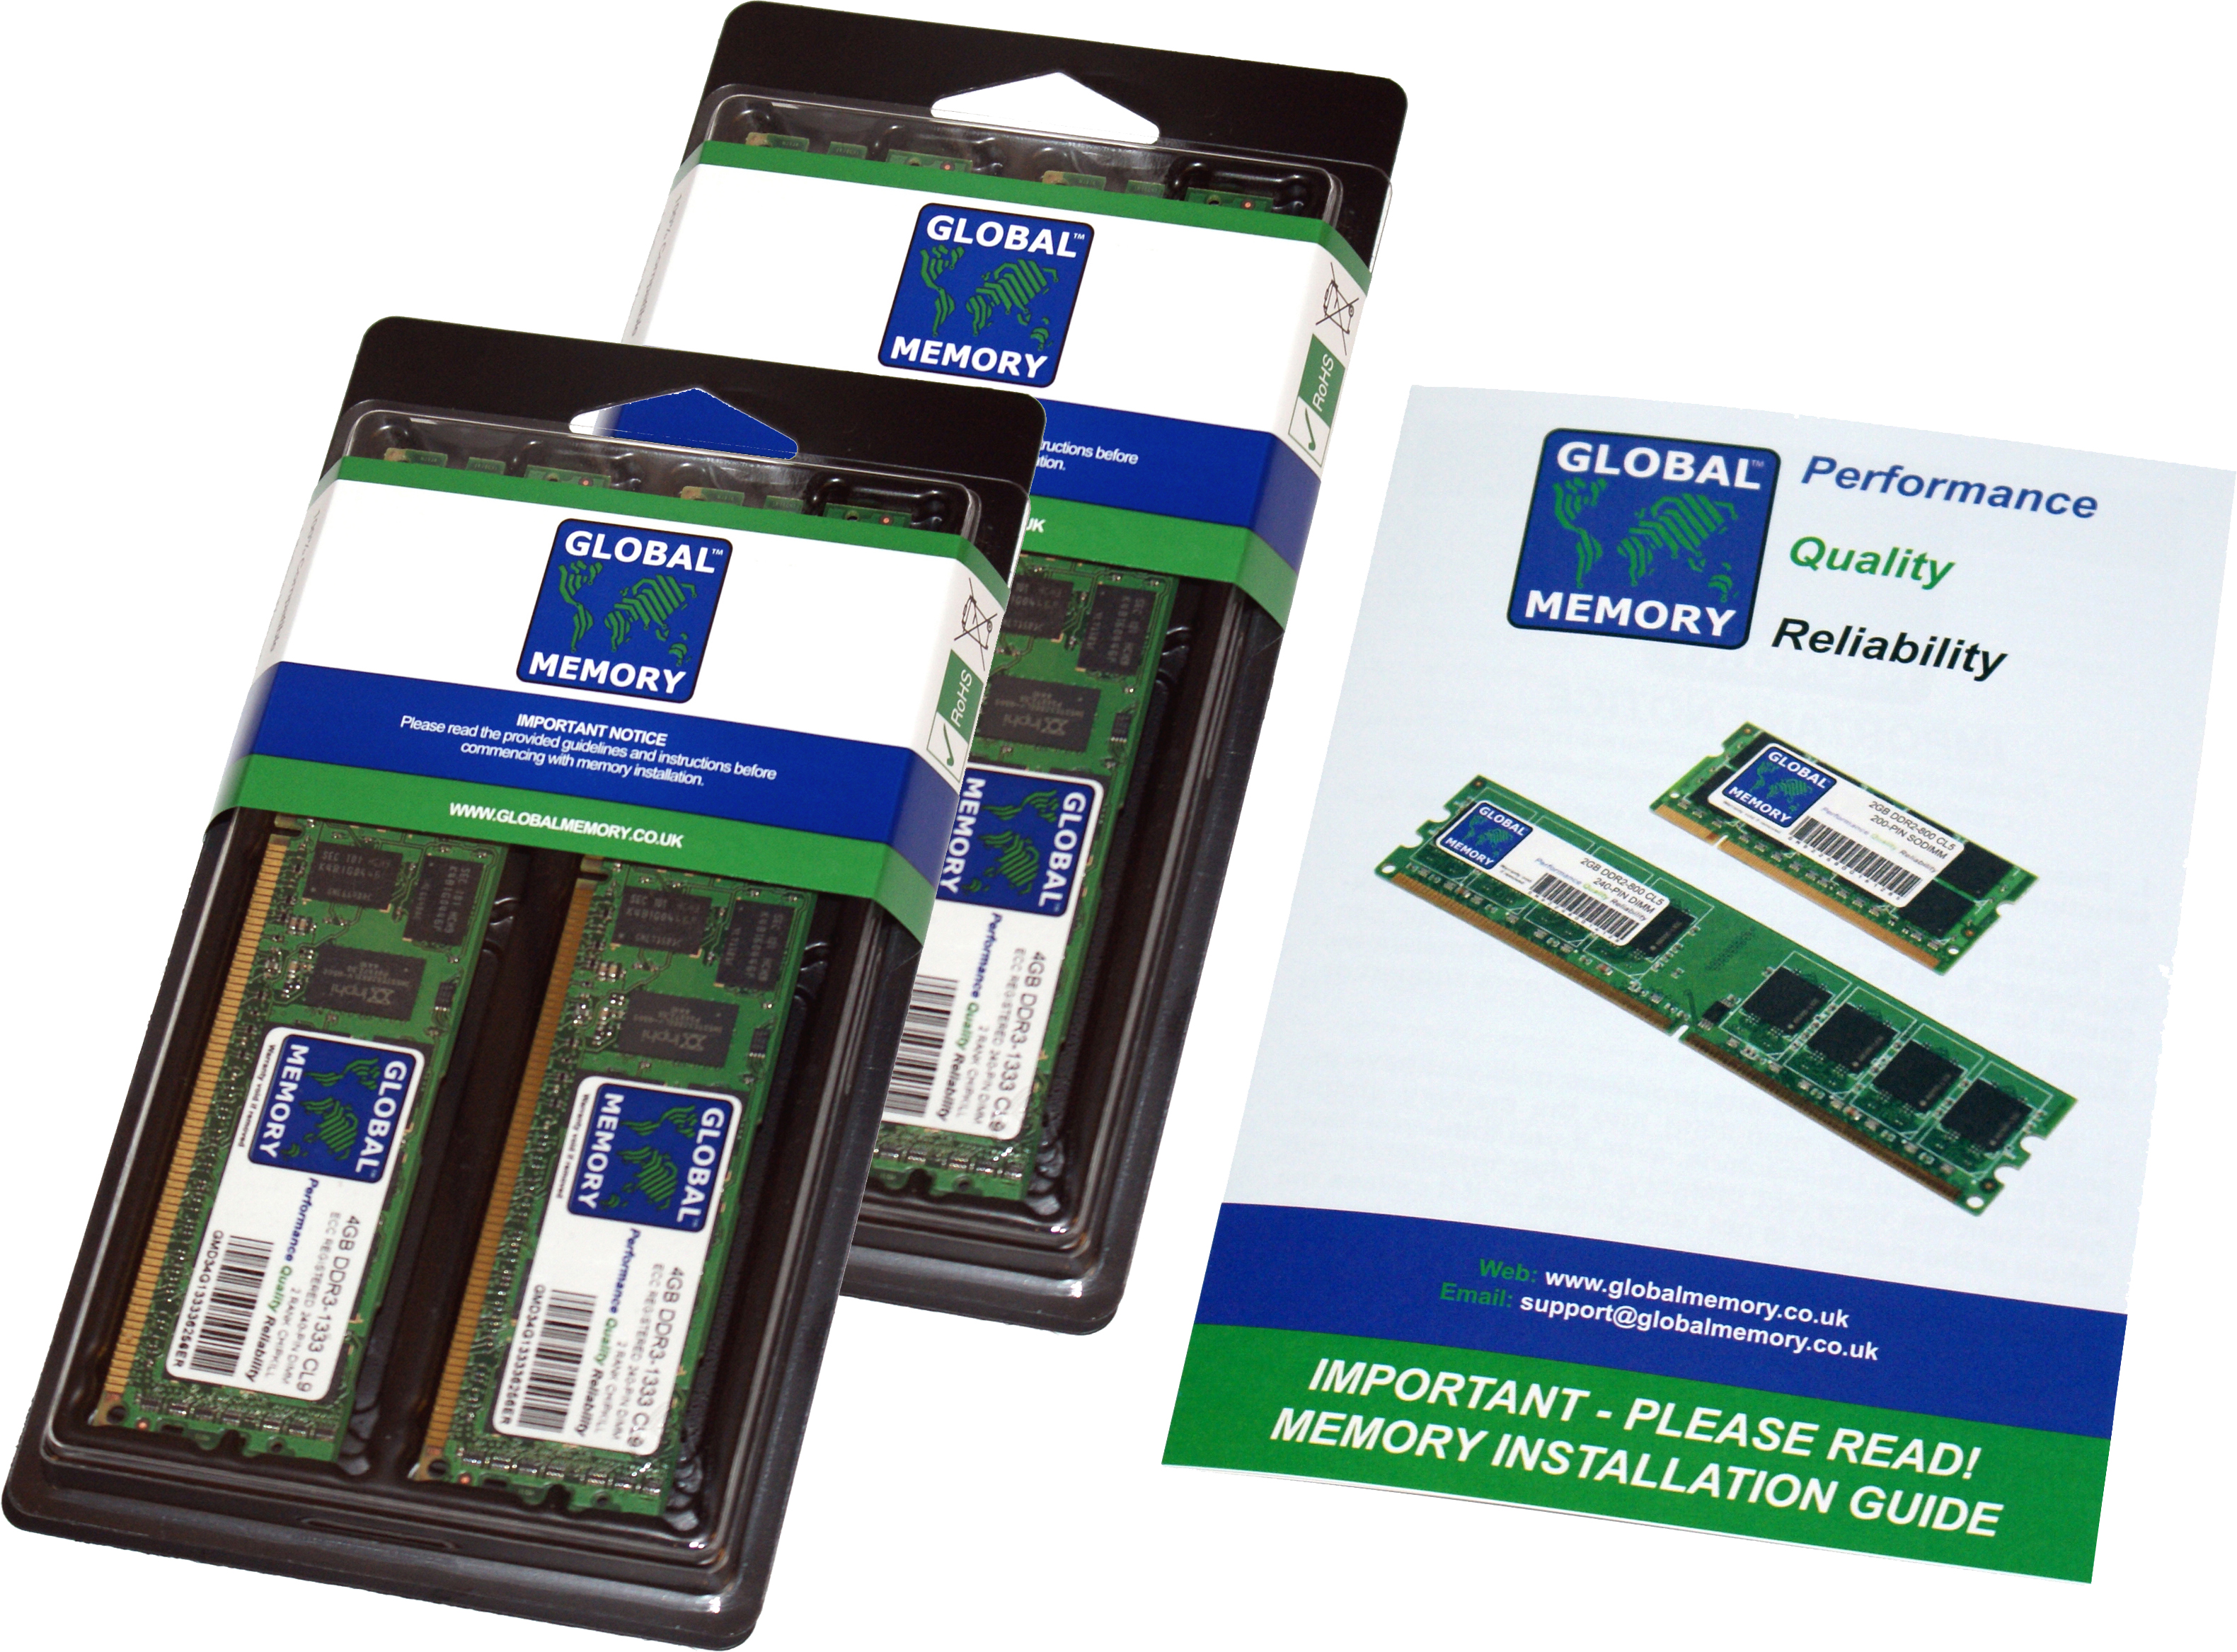 64GB (2 x 32GB) DDR4 2400MHz PC4-19200 288-PIN ECC REGISTERED DIMM (RDIMM) MEMORY RAM KIT FOR SERVERS/WORKSTATIONS/MOTHERBOARDS (4 RANK KIT CHIPKILL)